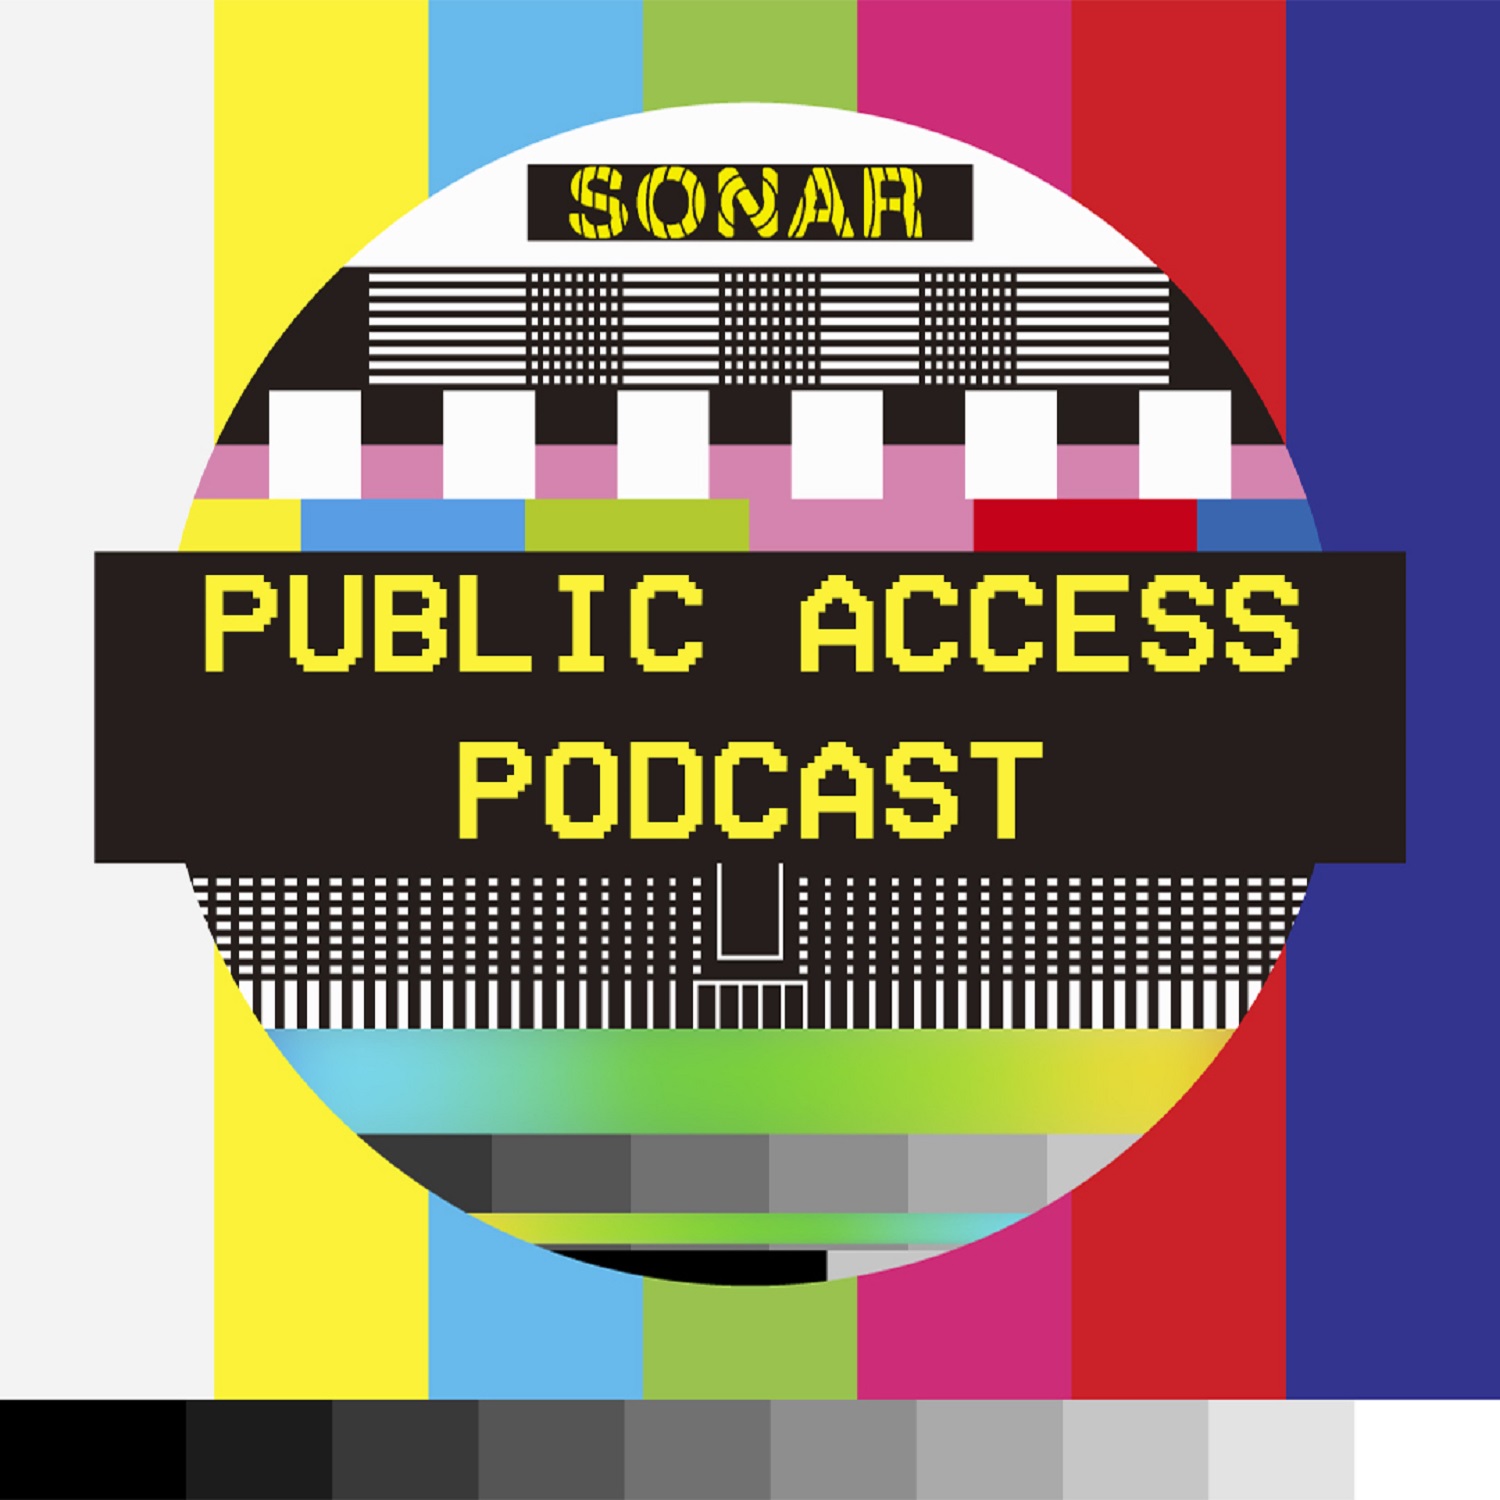 Public Access Podcast